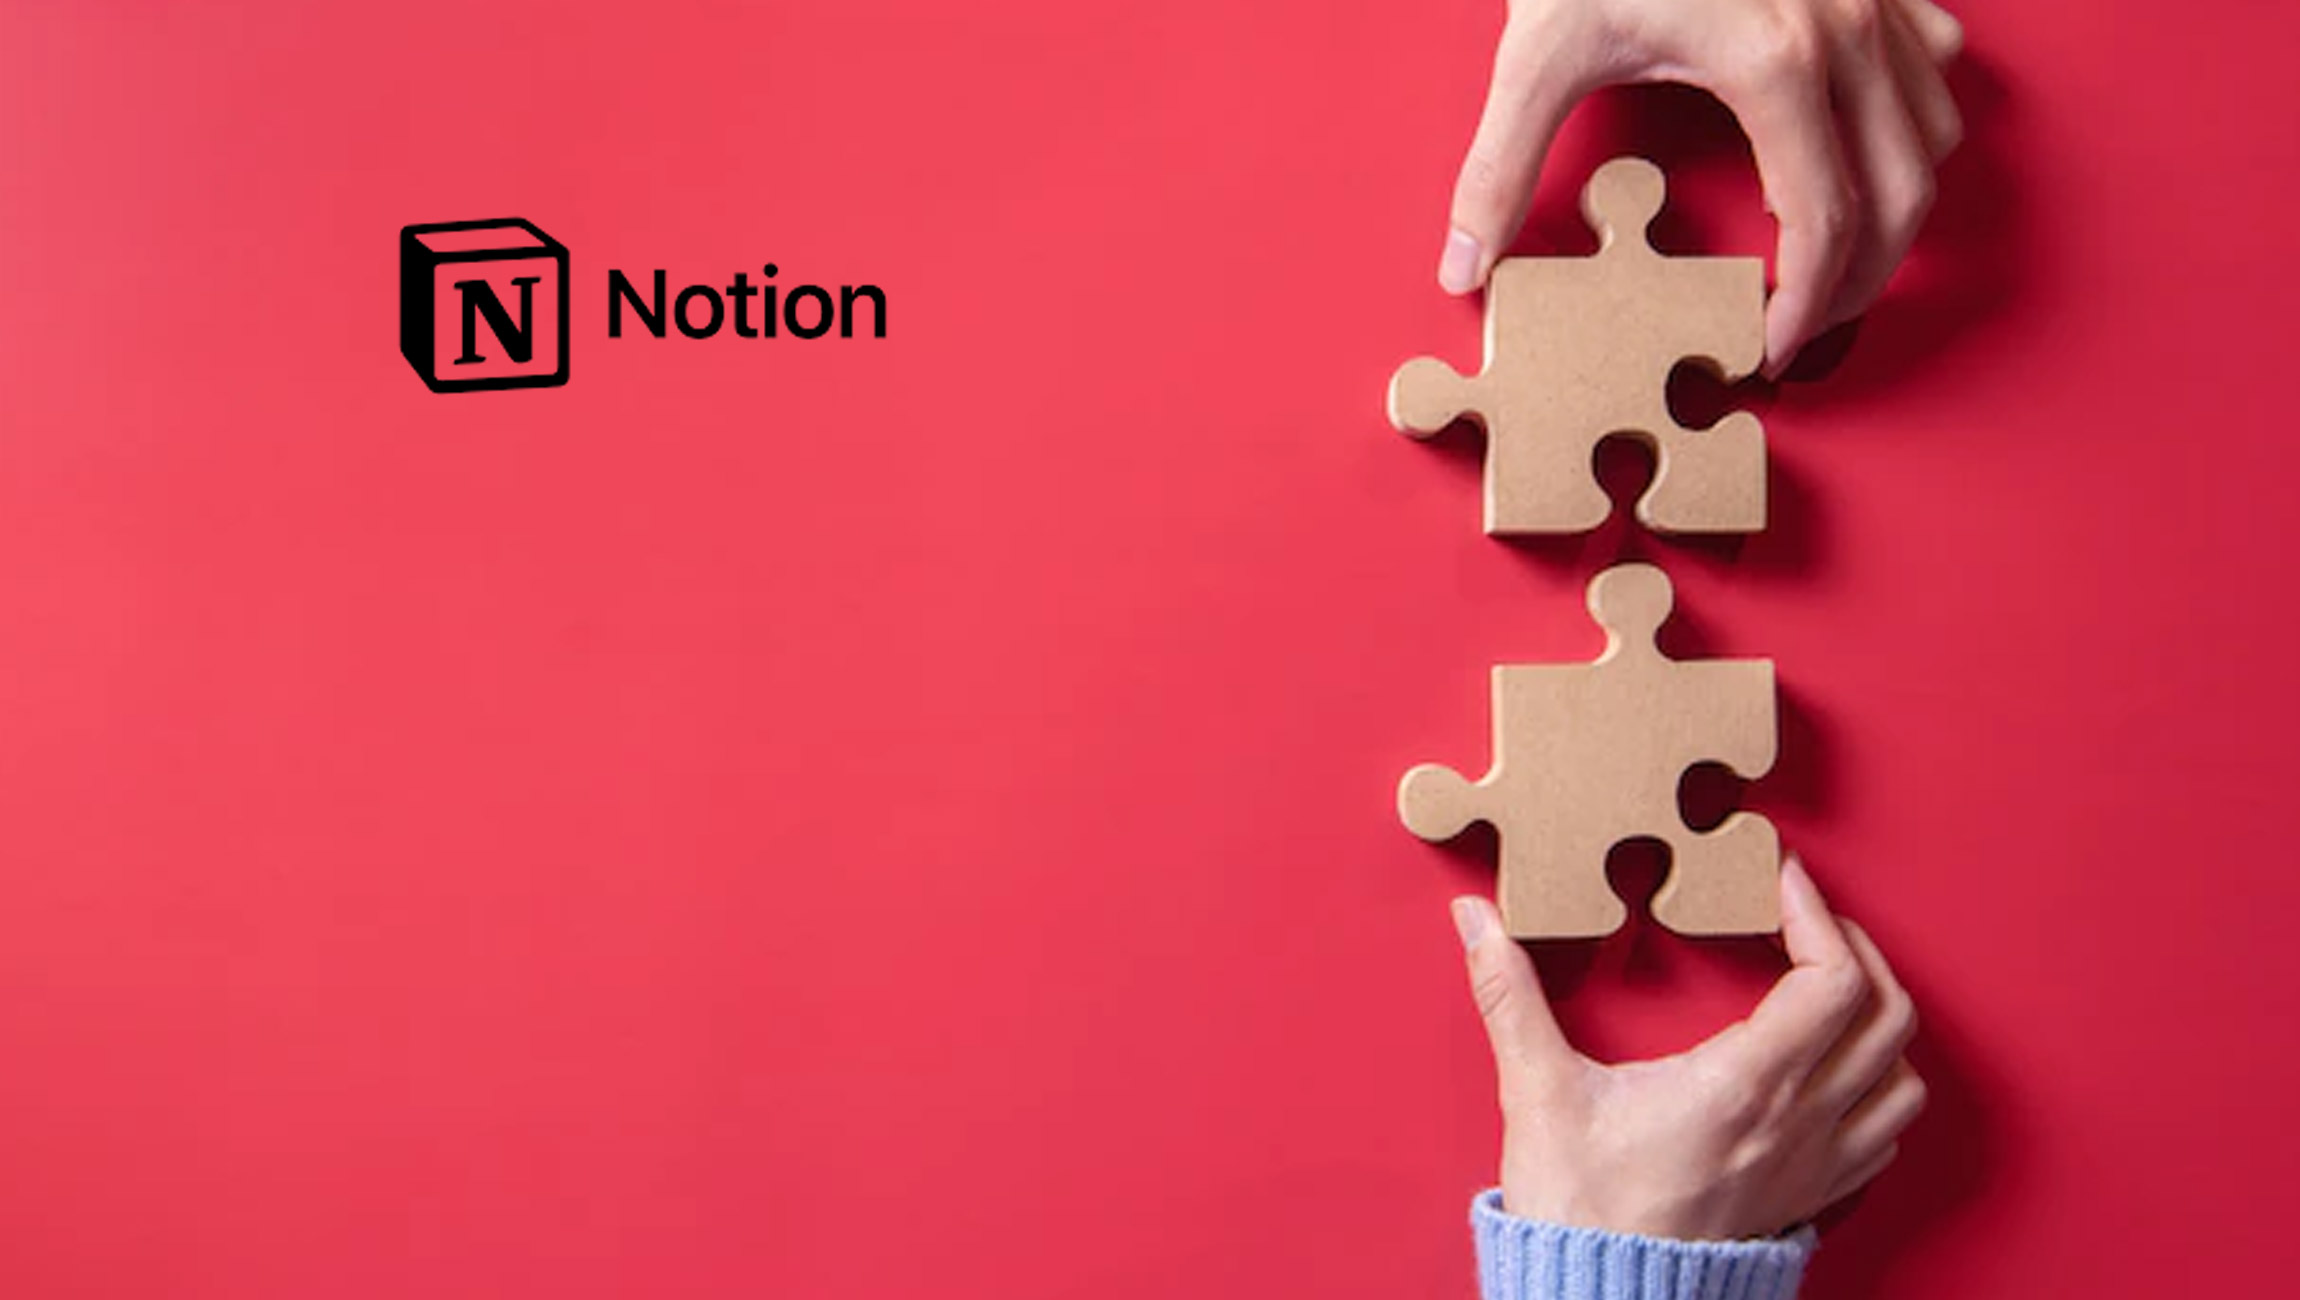 Notion Acquires Cron, the NextGeneration Calendar